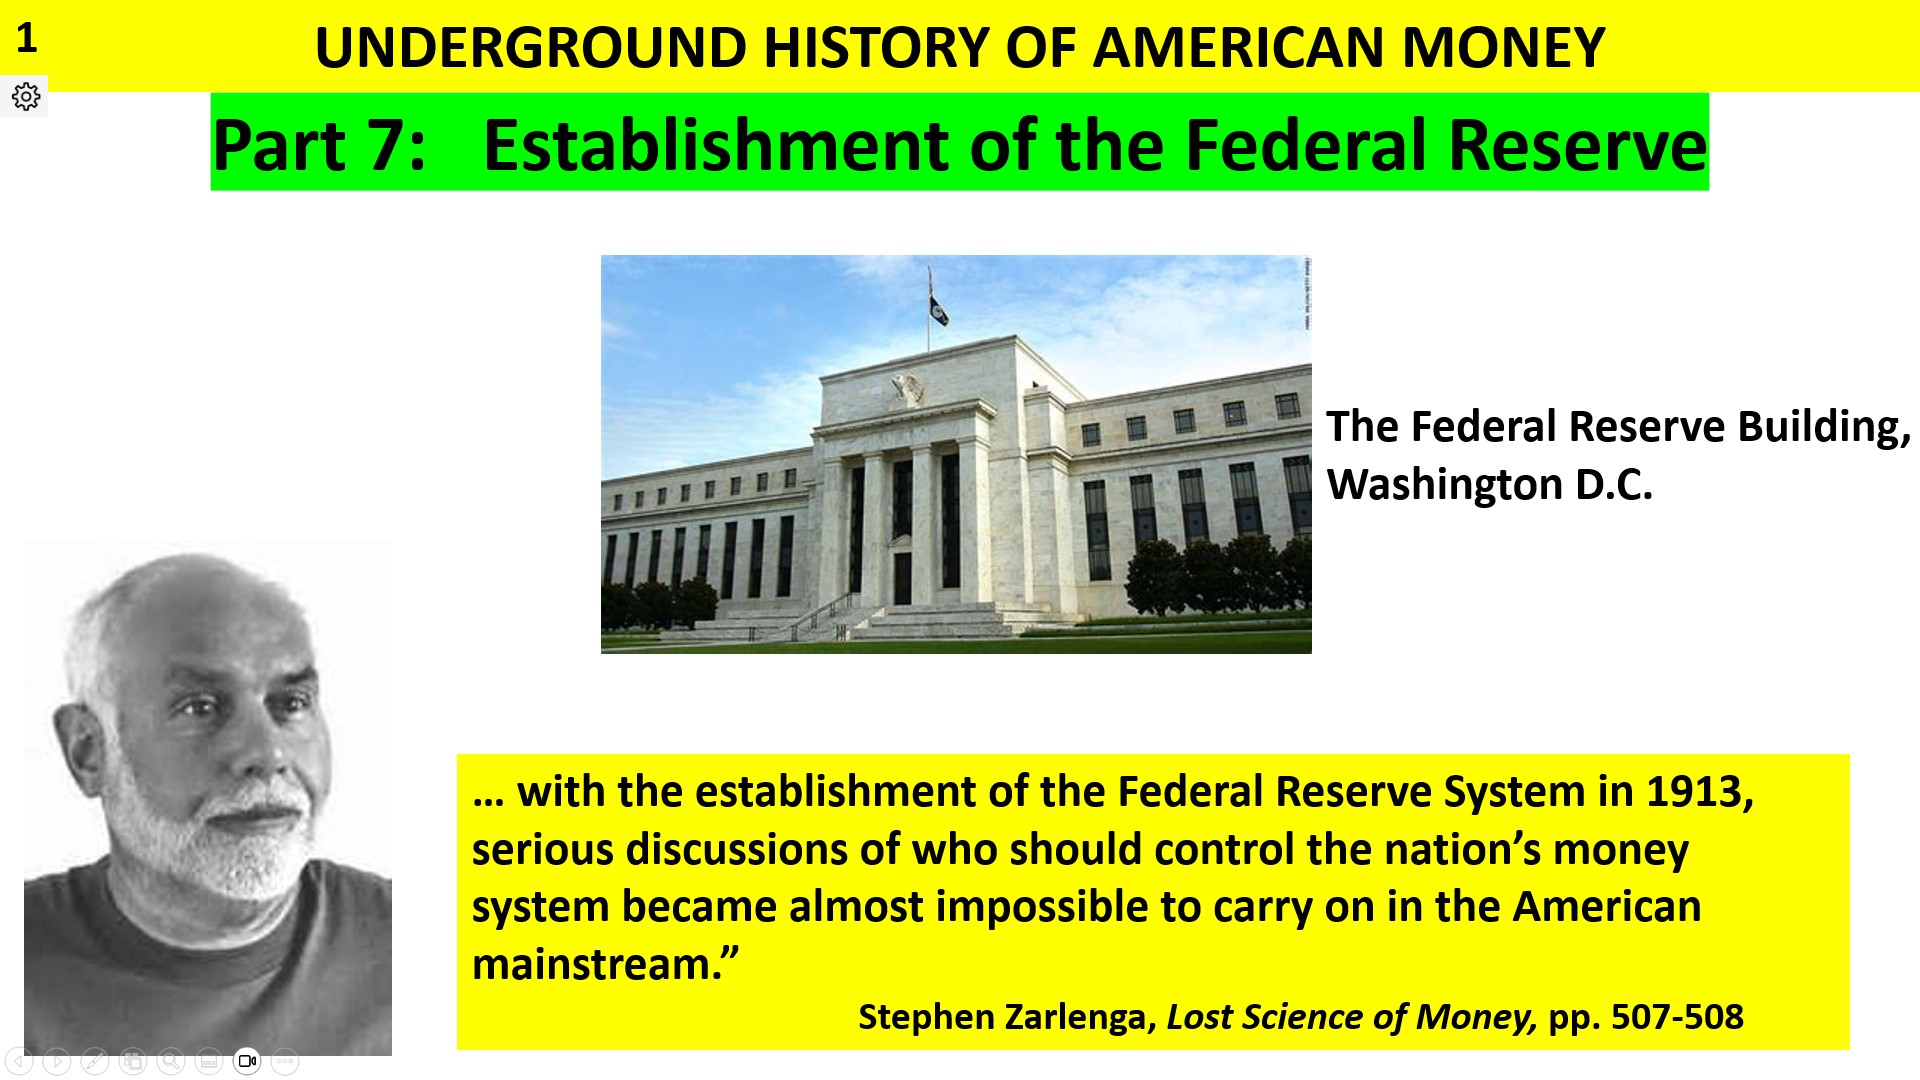 Establishment of the Federal Reserve